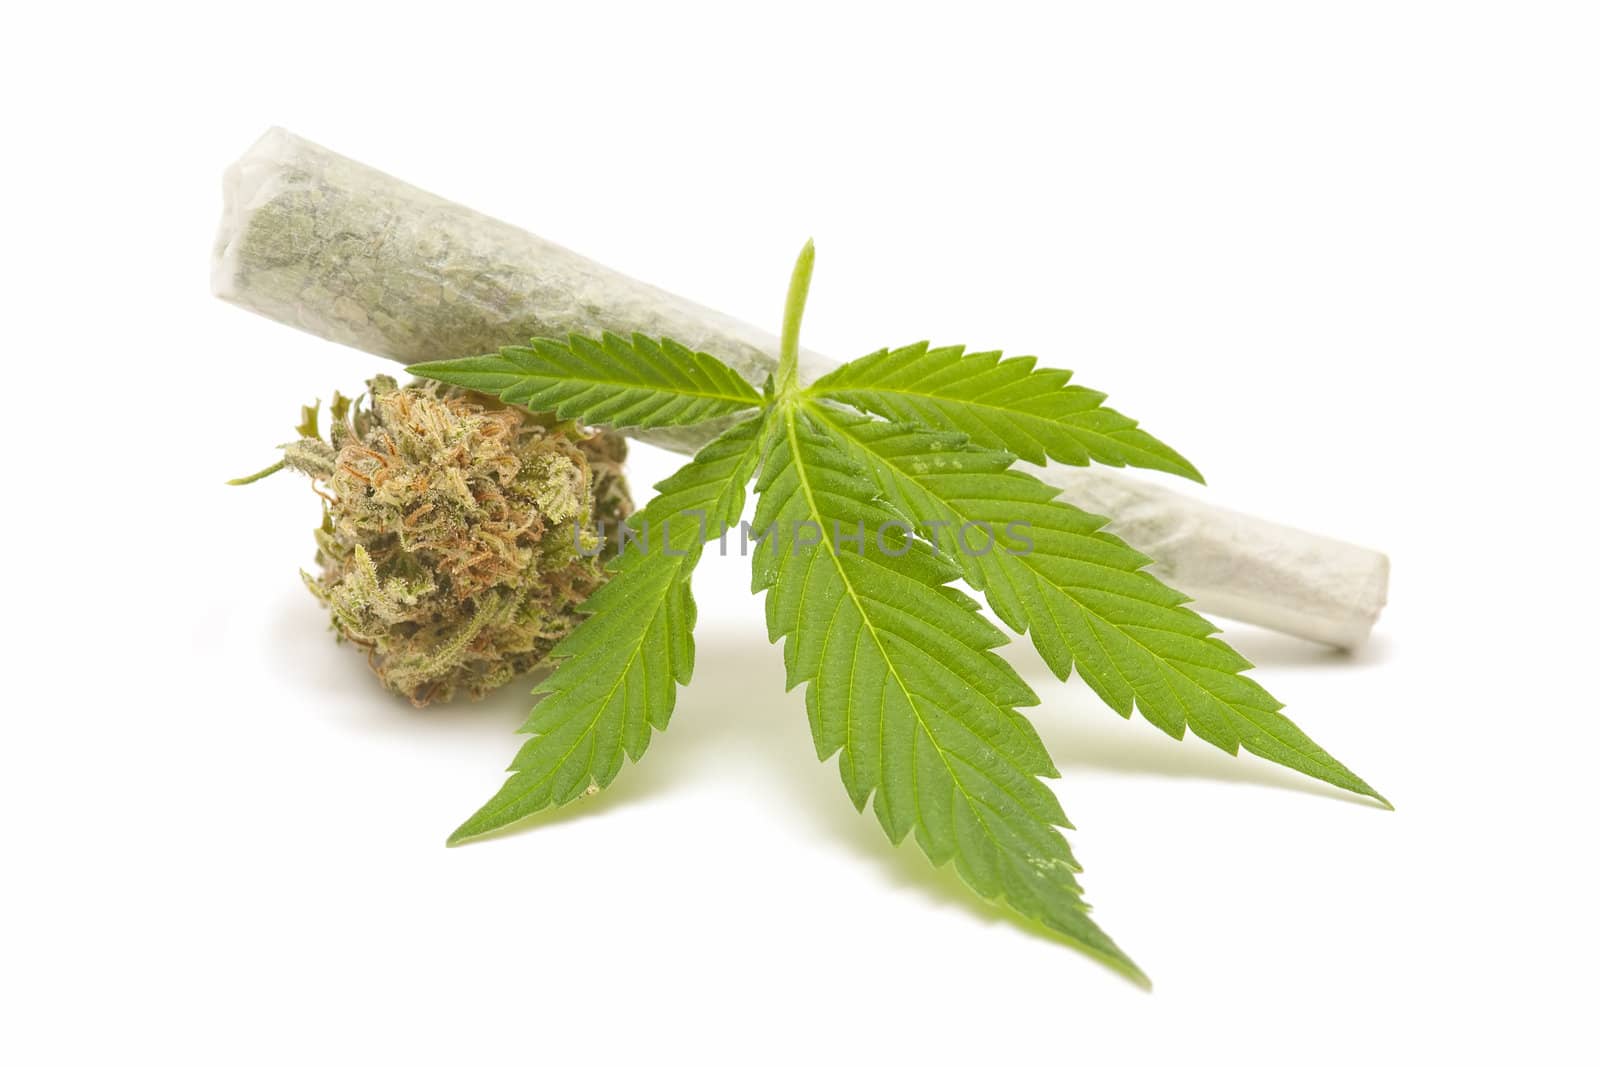 marijuana cigarette and green Leaf Isolated on white background

